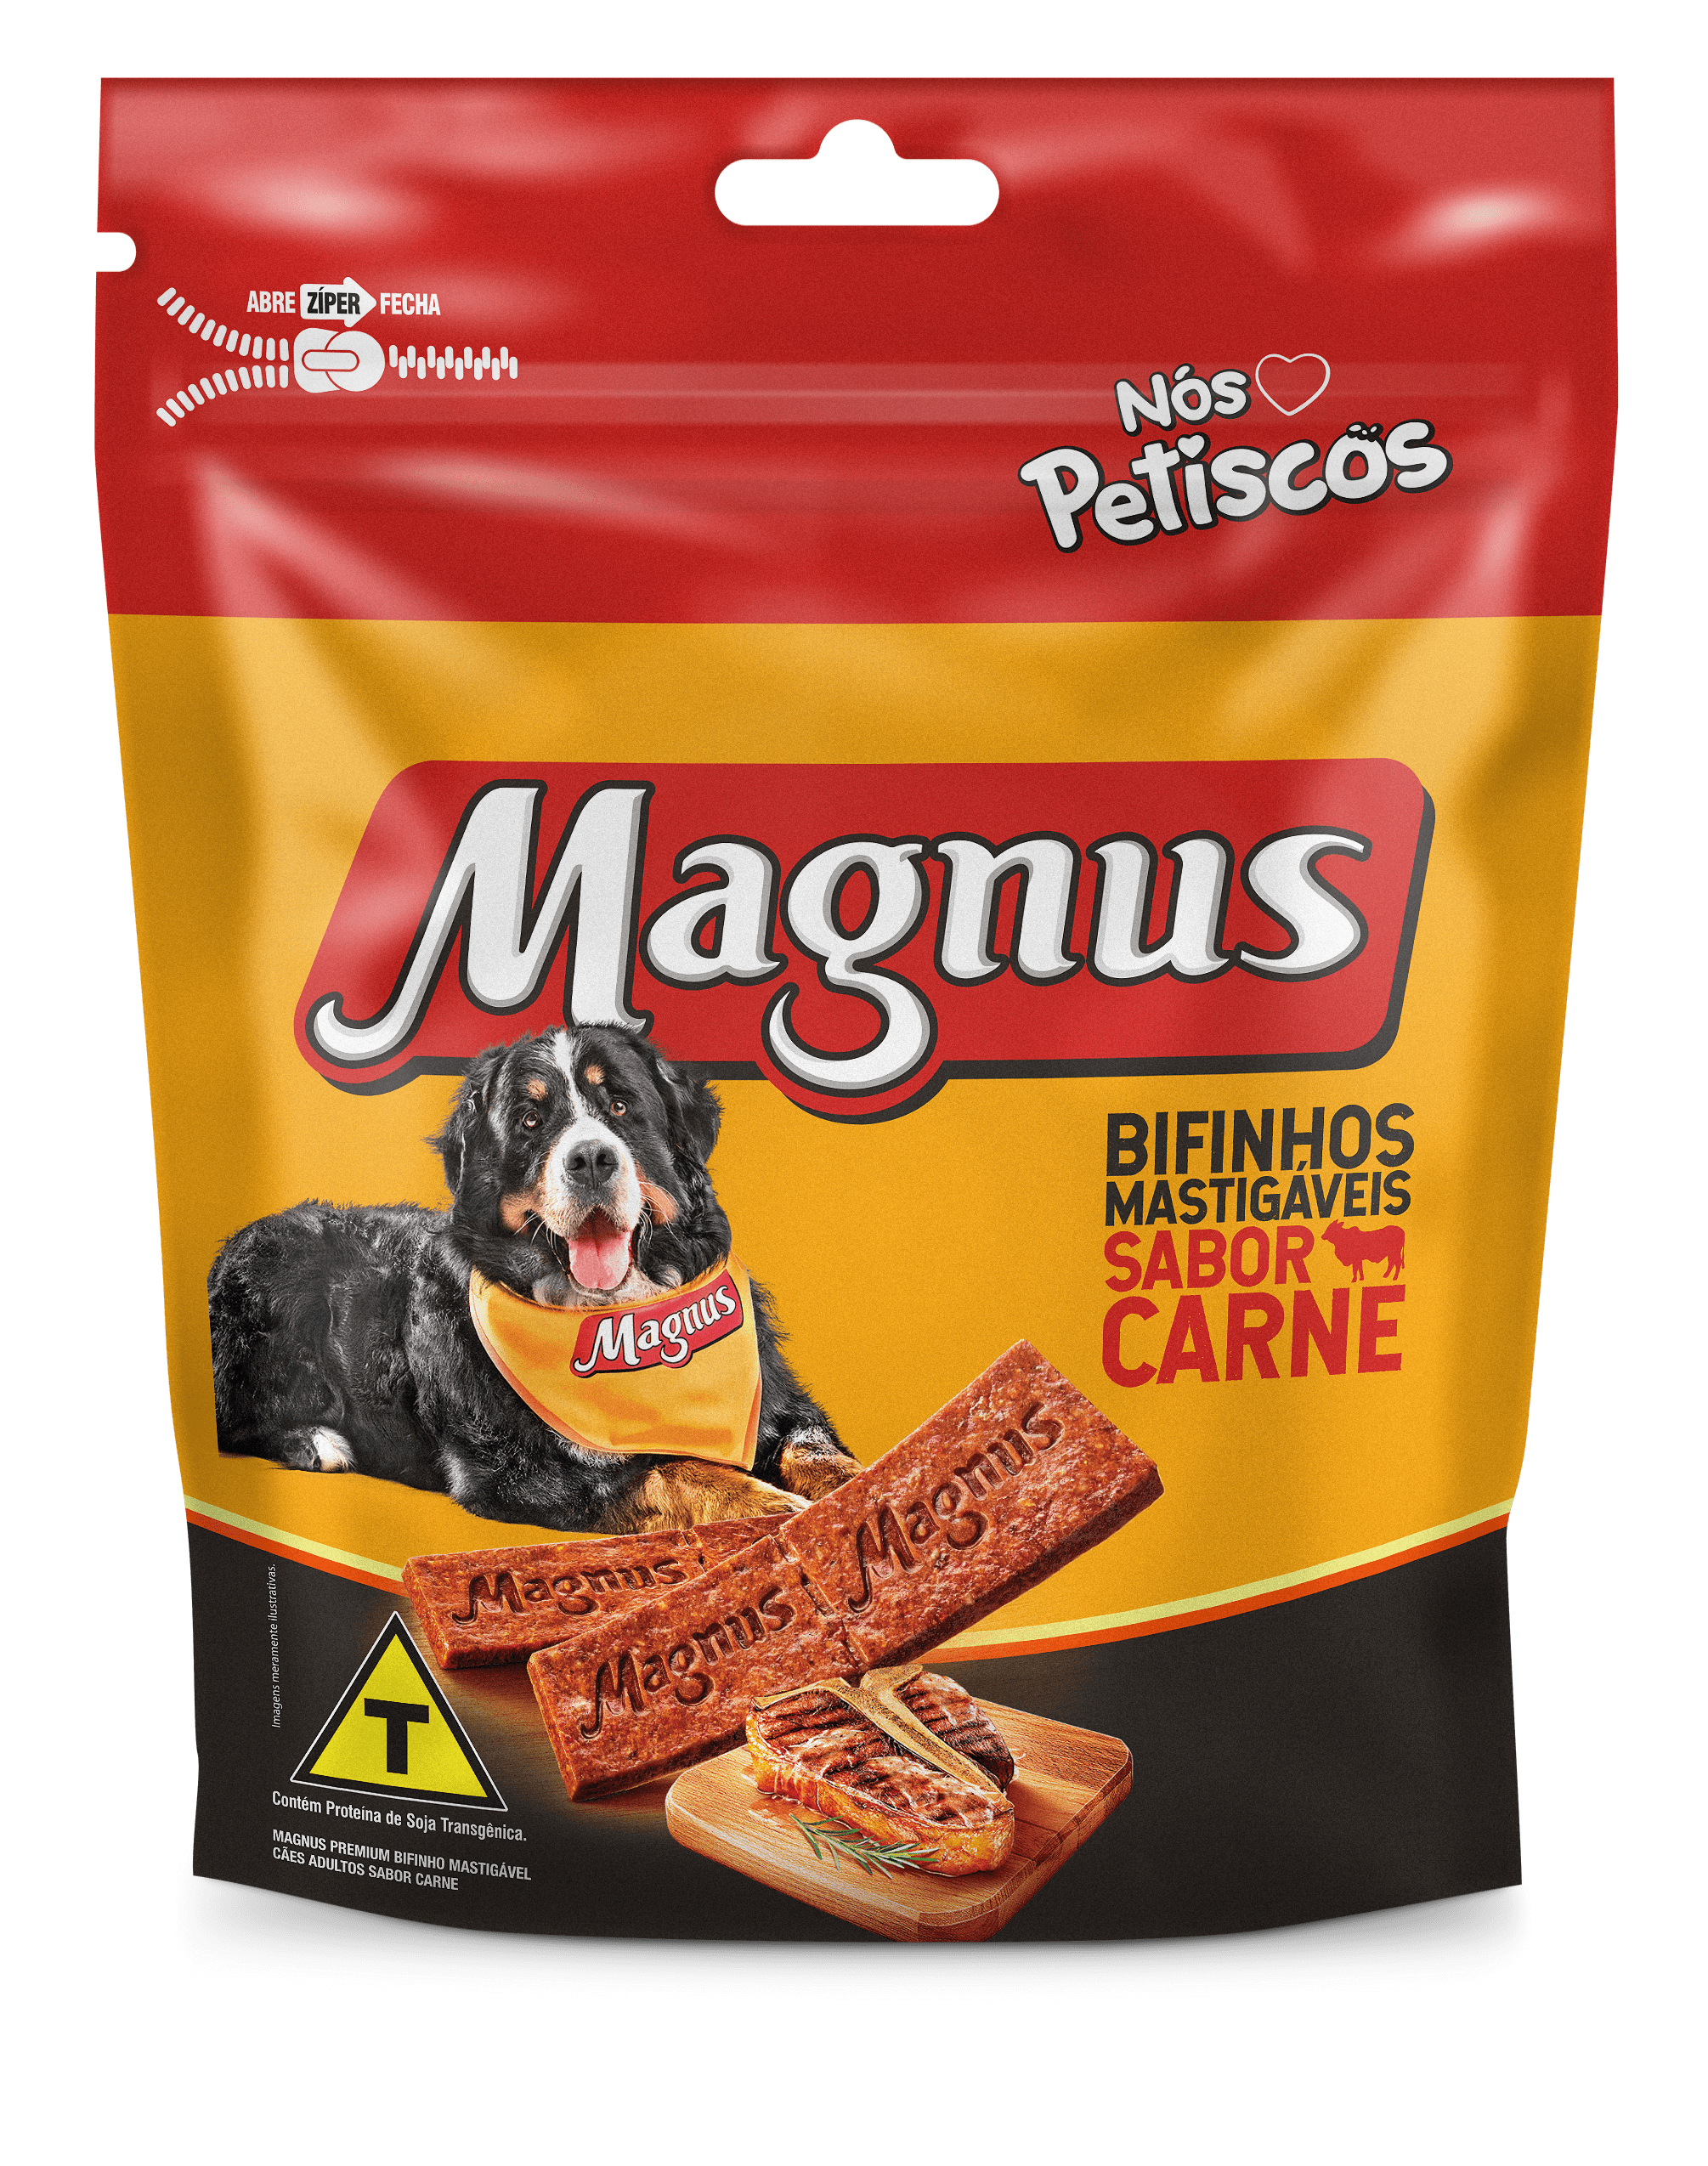 Magnus Bifinhos Mastigáveis Adult Dogs Beef Flavor